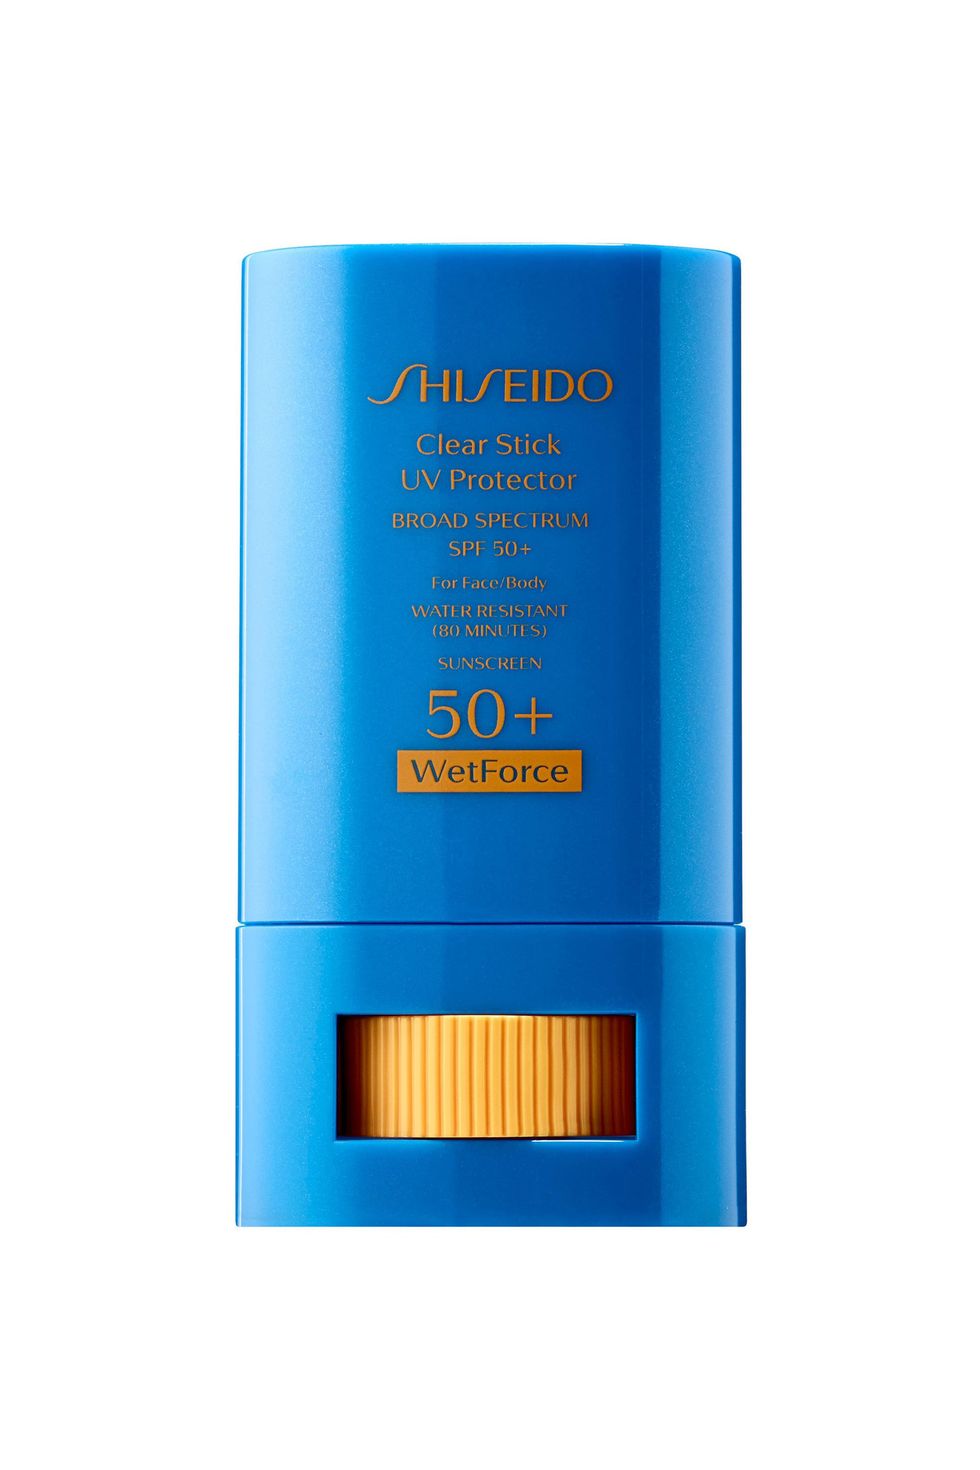 Shiseido Clear Stick UV Protector Broad Spectrum SPF 50+